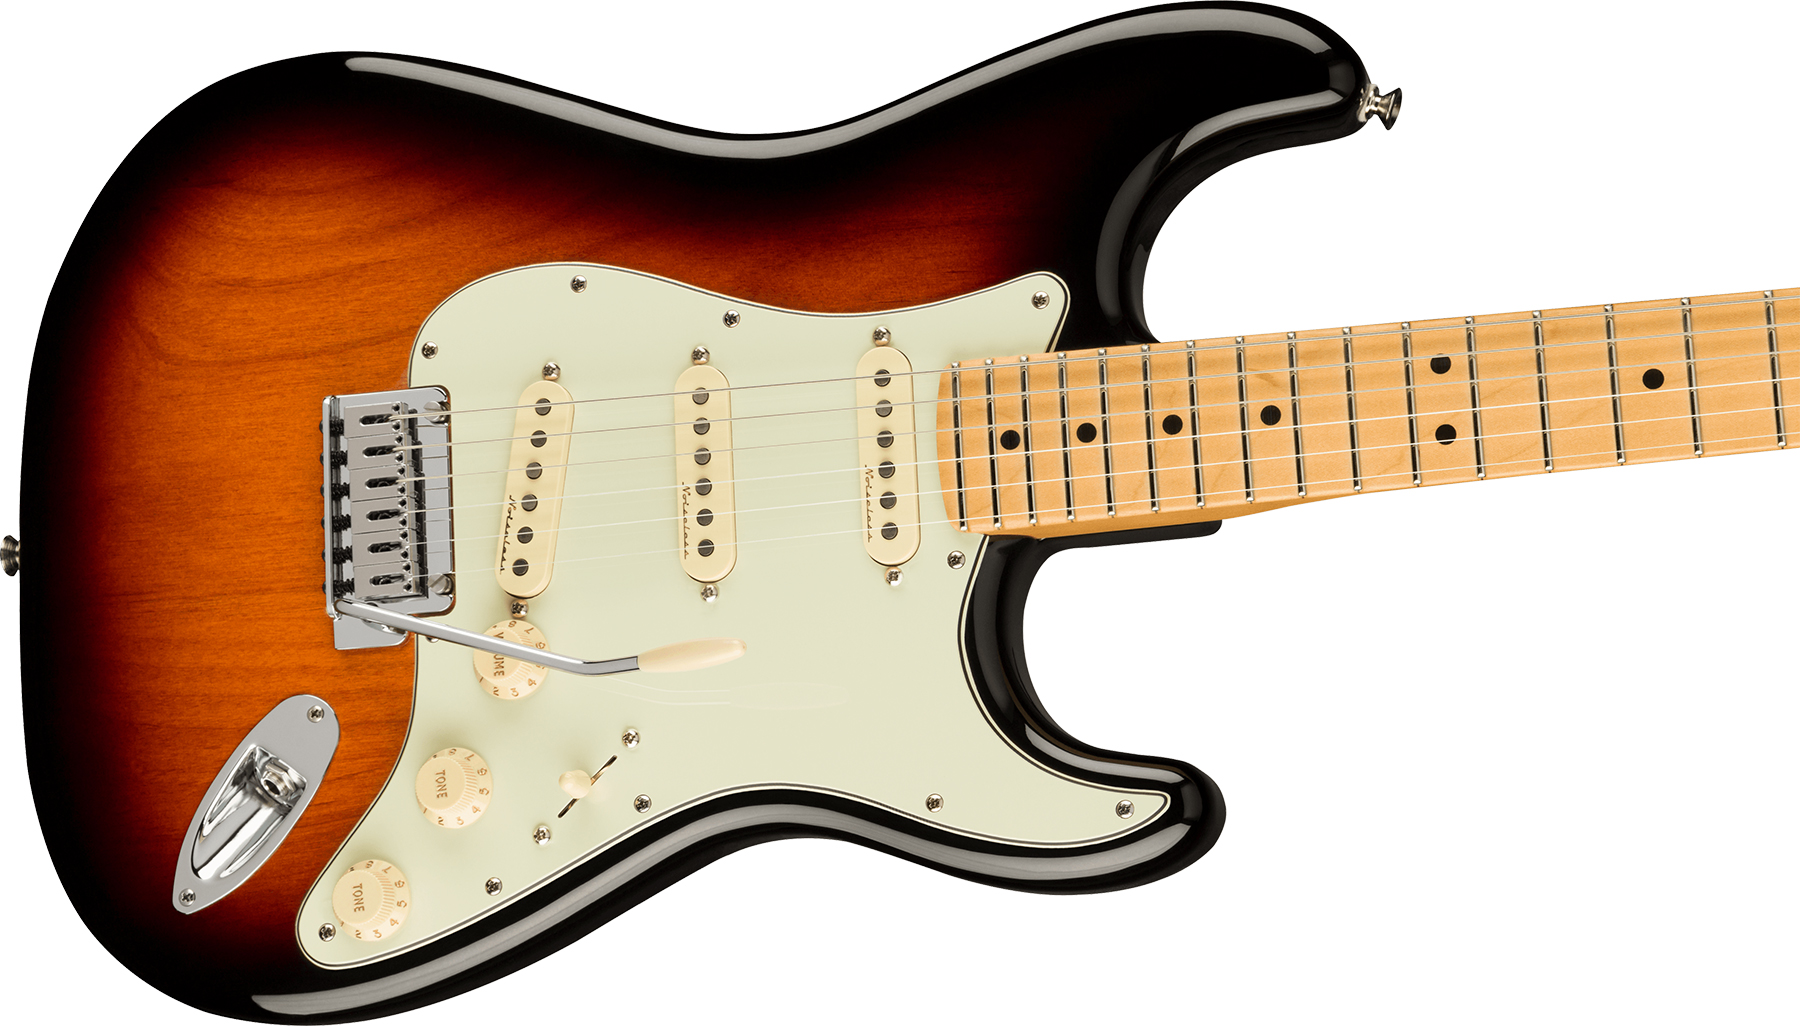 Fender Strat Player Plus Lh Mex Gaucher 3s Trem Mn - 3-color Sunburst - Left-handed electric guitar - Variation 2